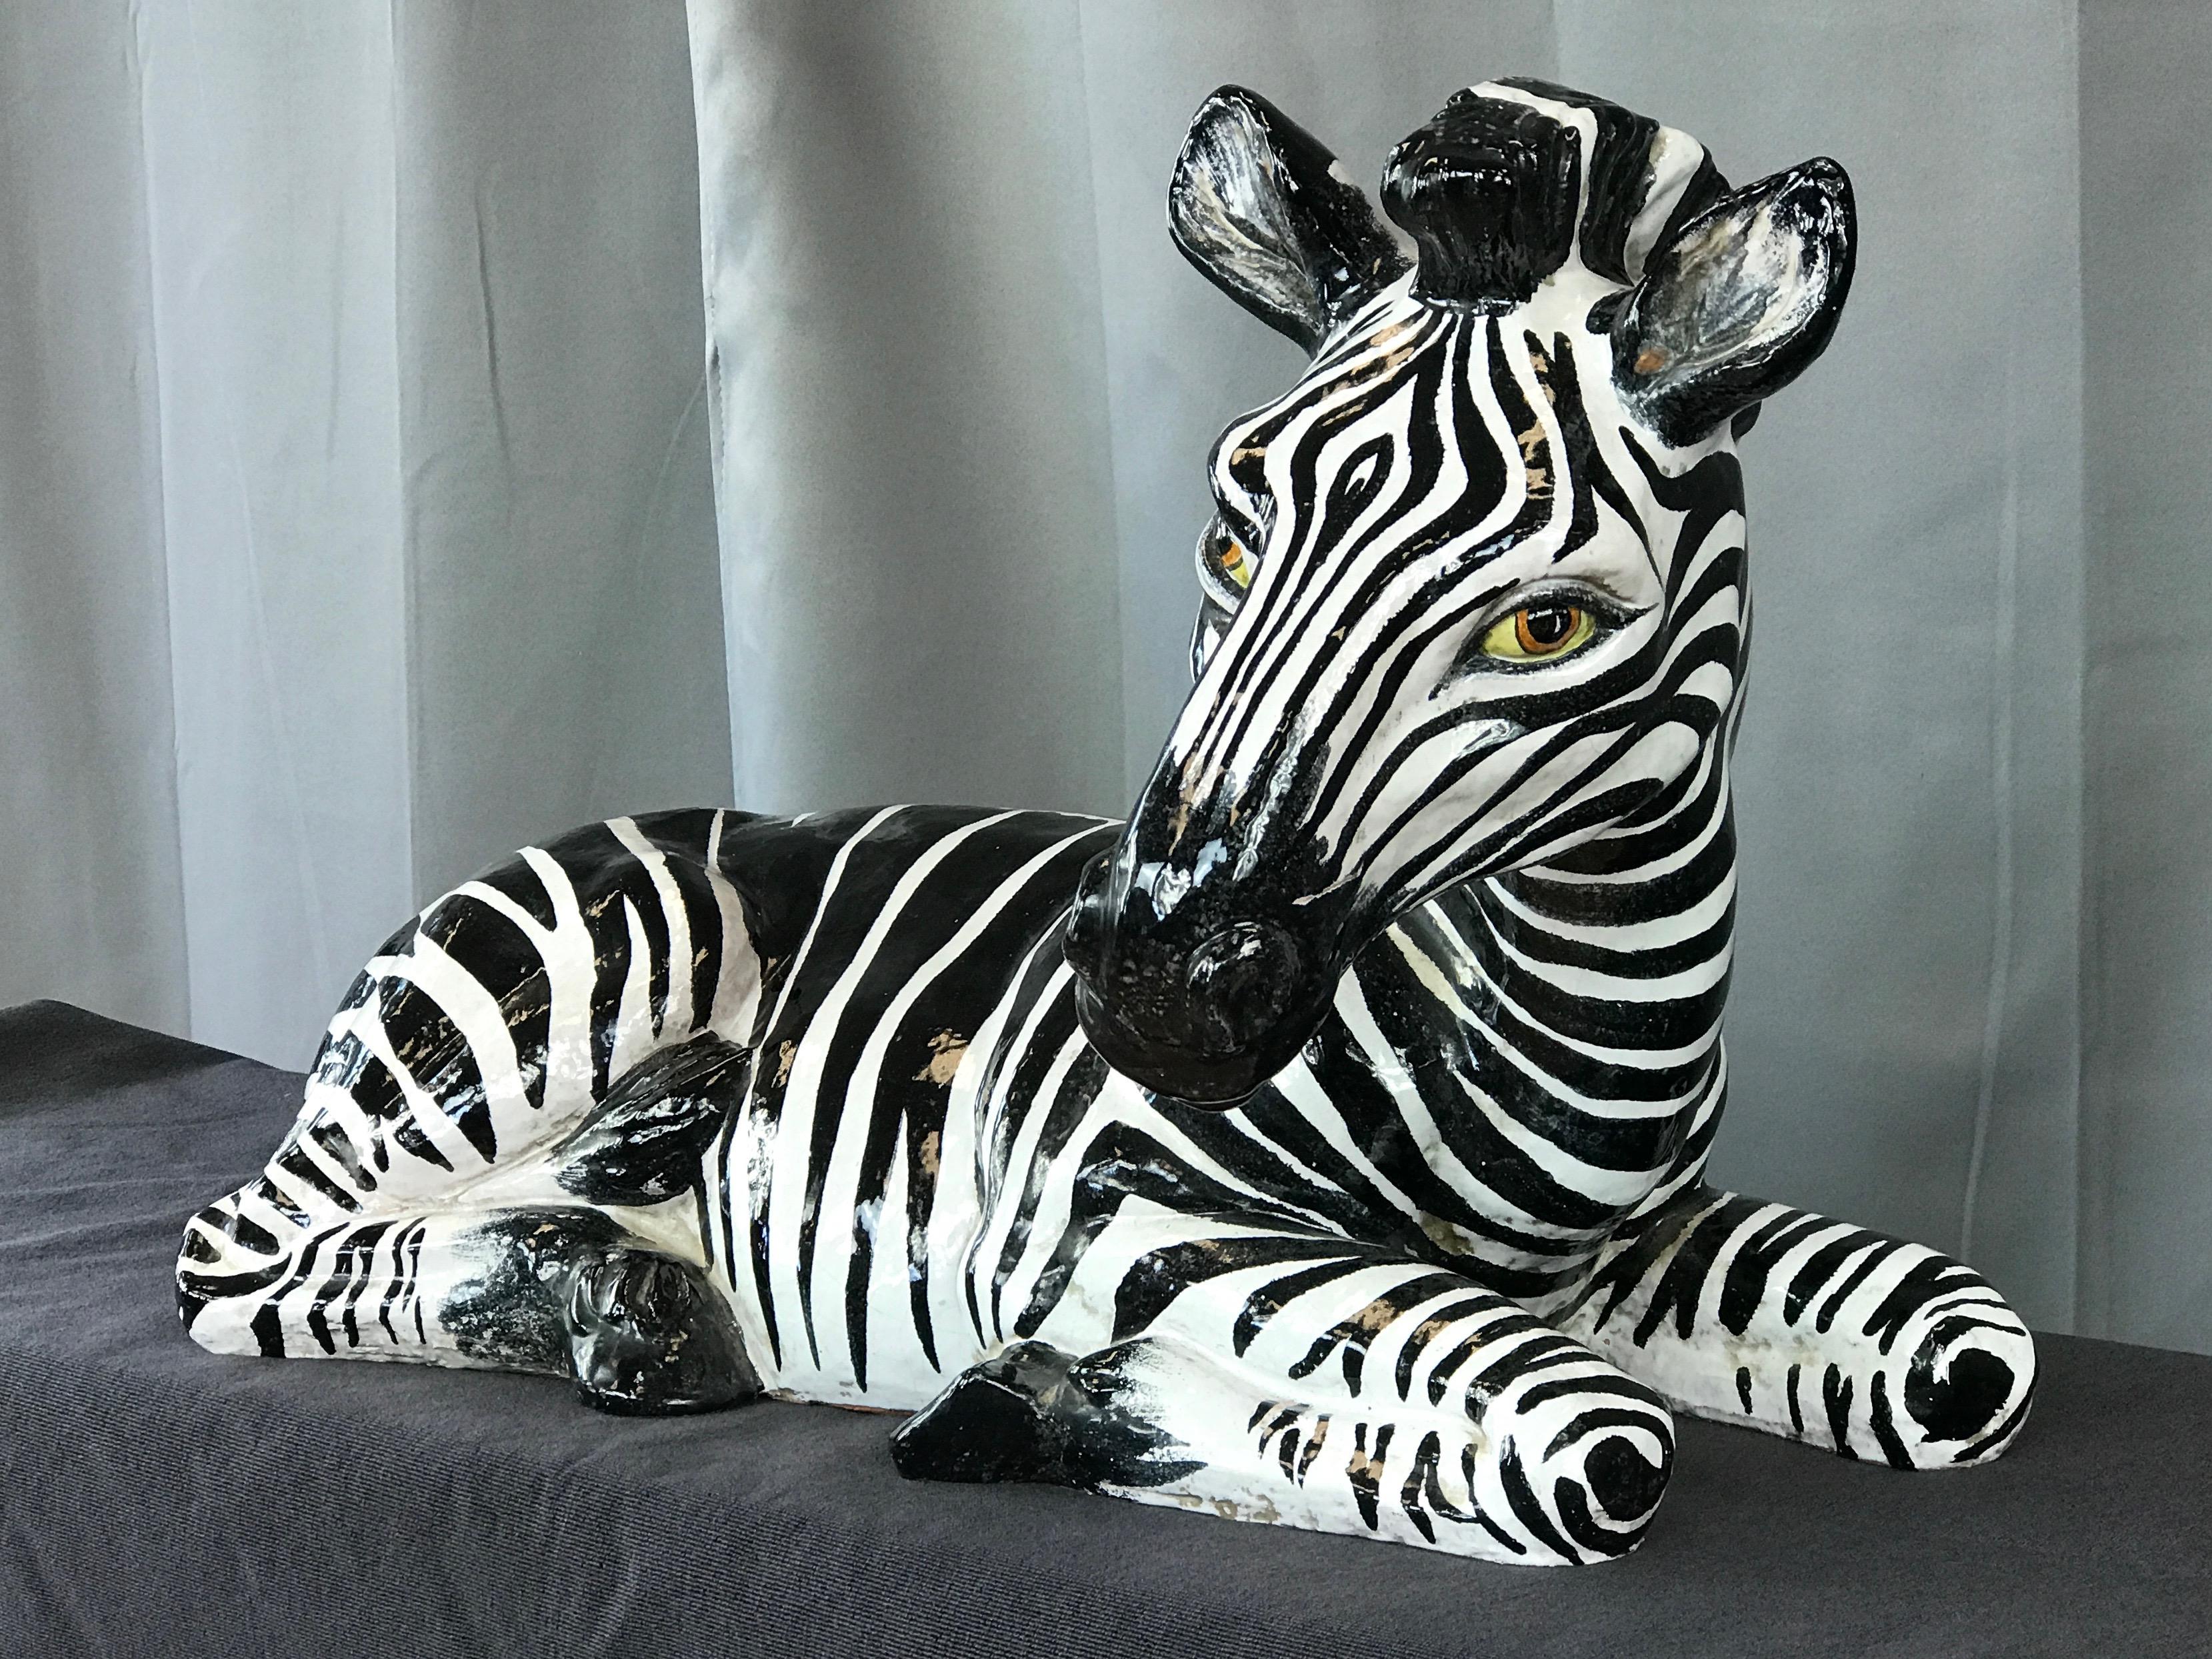 Großes glasiertes Terrakotta-Zebra im Stil von Manlio Trucco, Italien, ca. 1960er Jahre (Hollywood Regency)